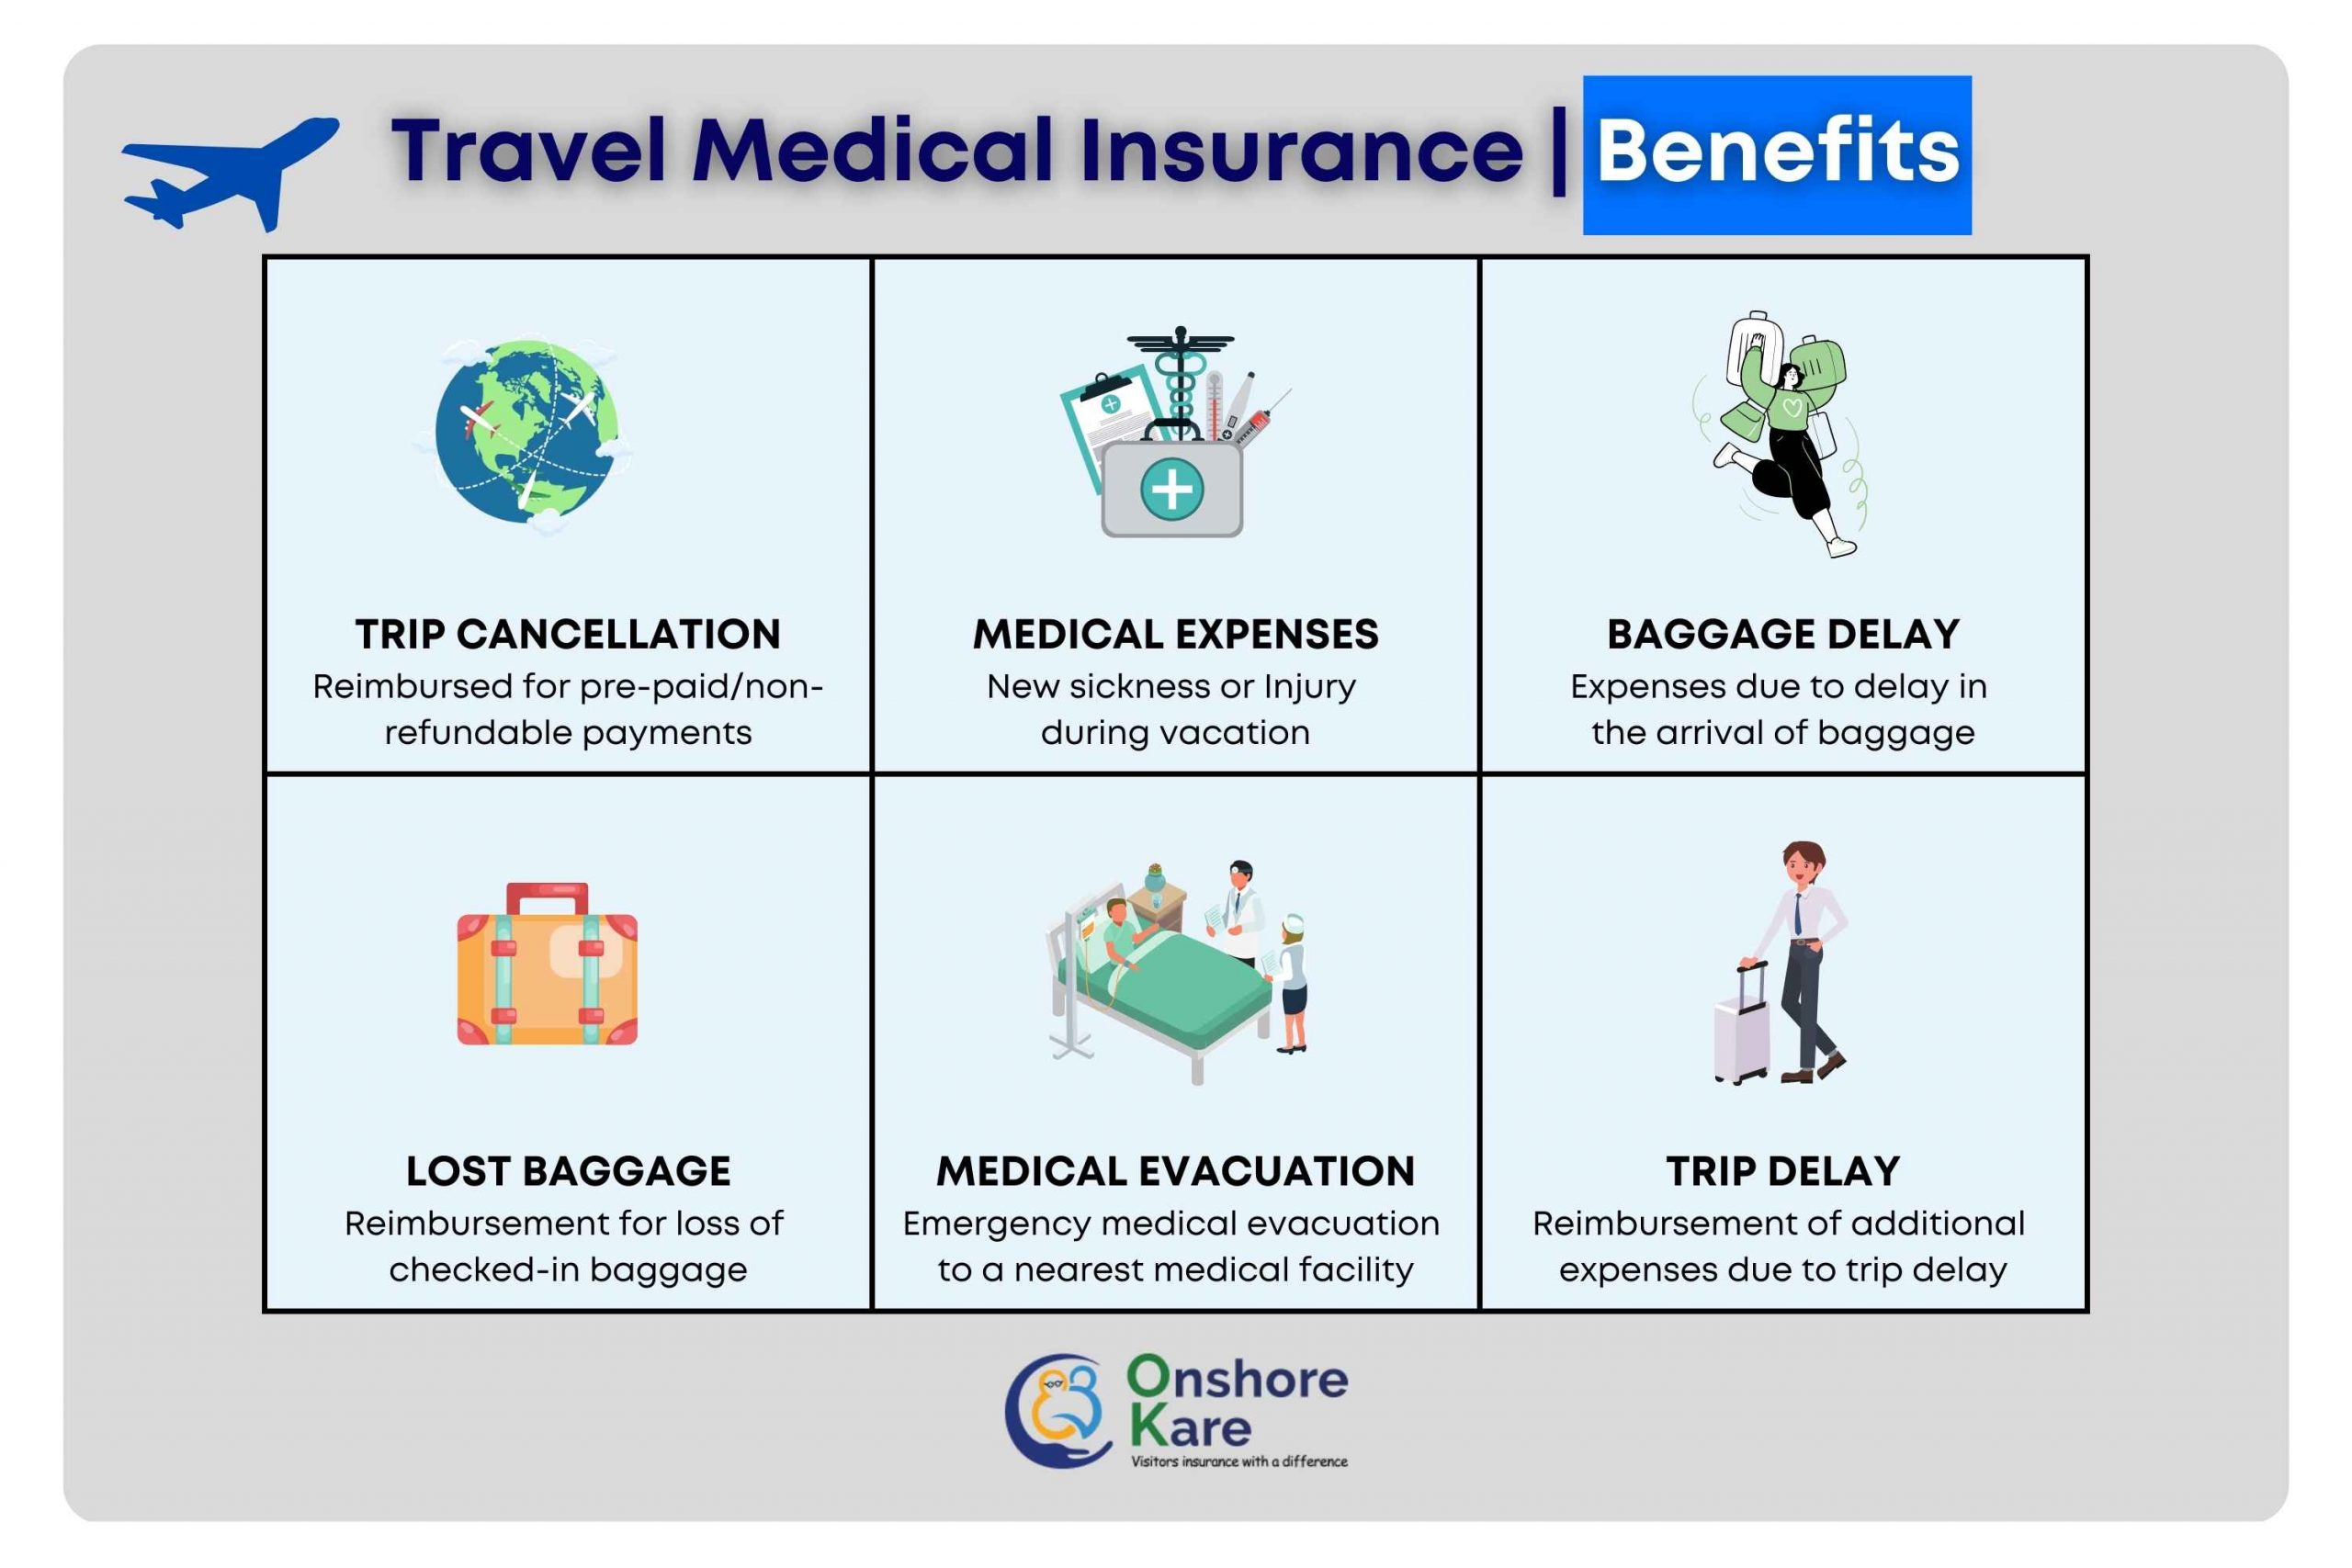 Travel Medical Insurance Benefits